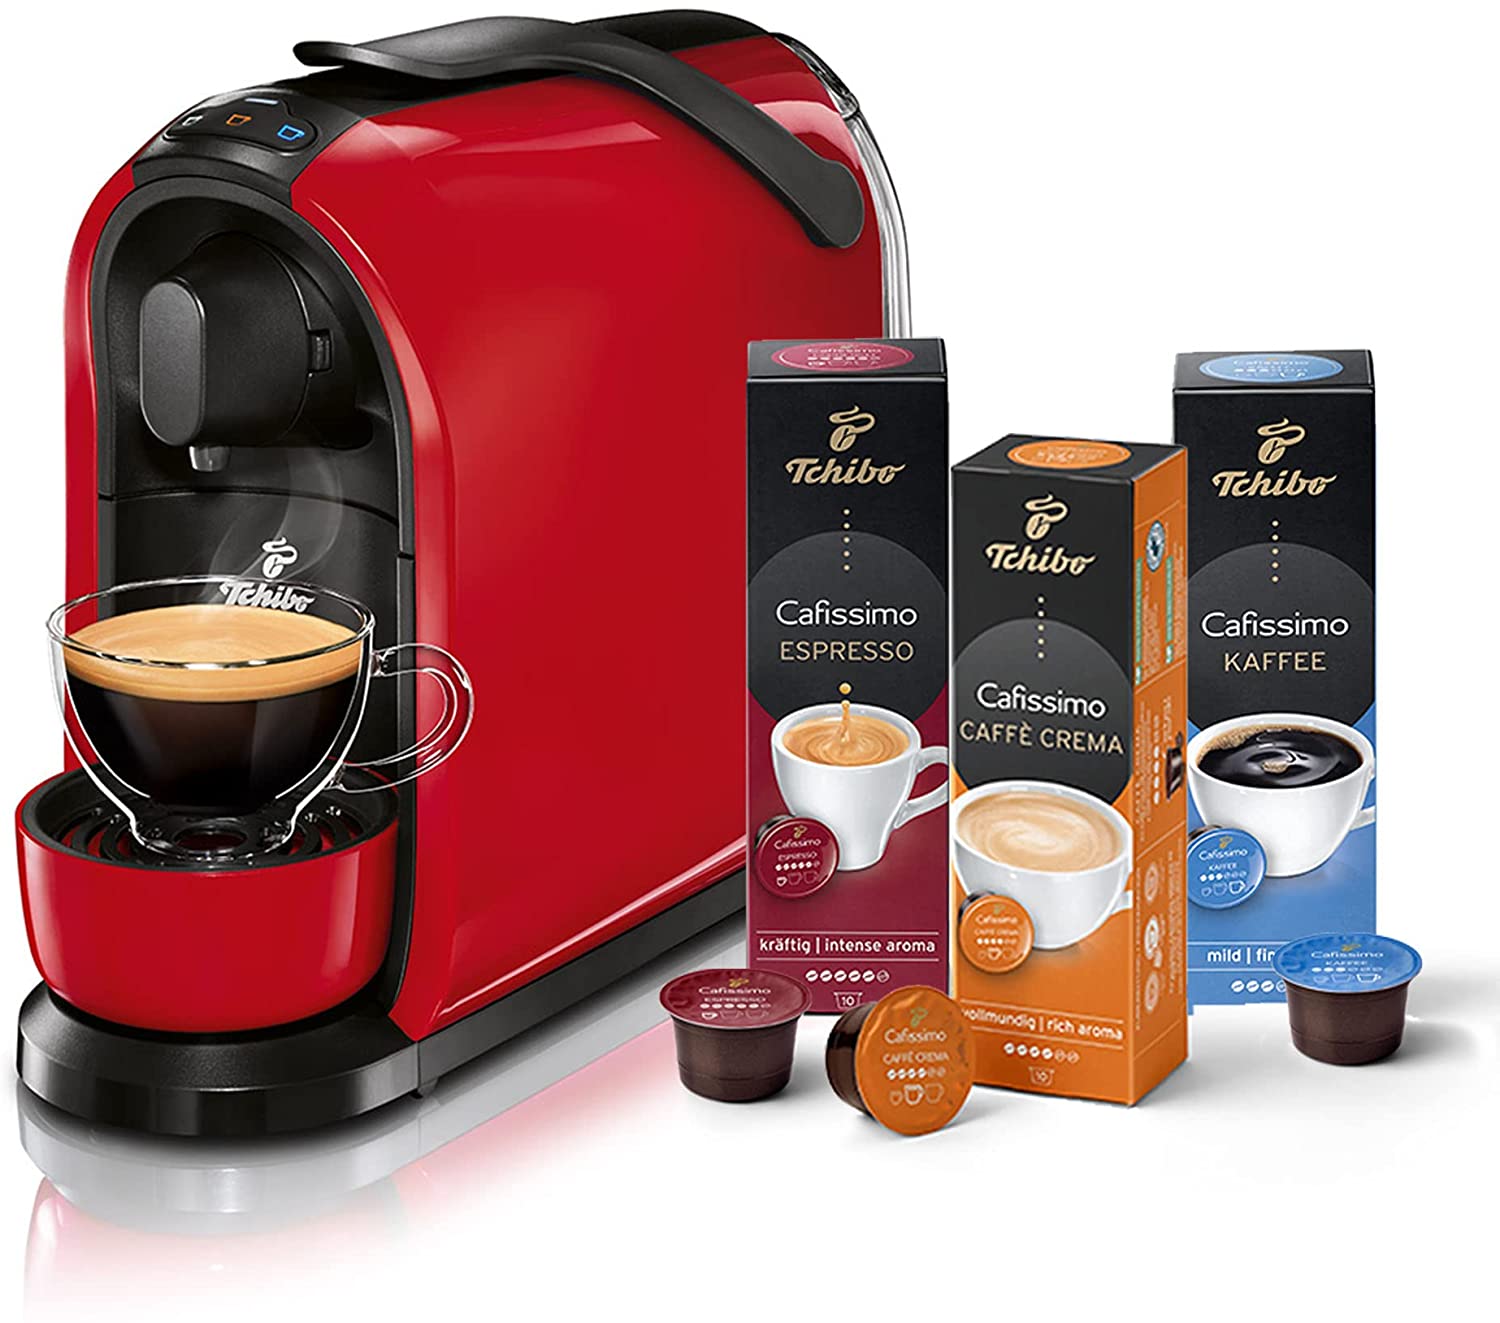 Tchibo Cafissimo Pure Coffee Machine for Coffee, Espresso, Caffè Crema and Tea, Includes 30 Capsules, red